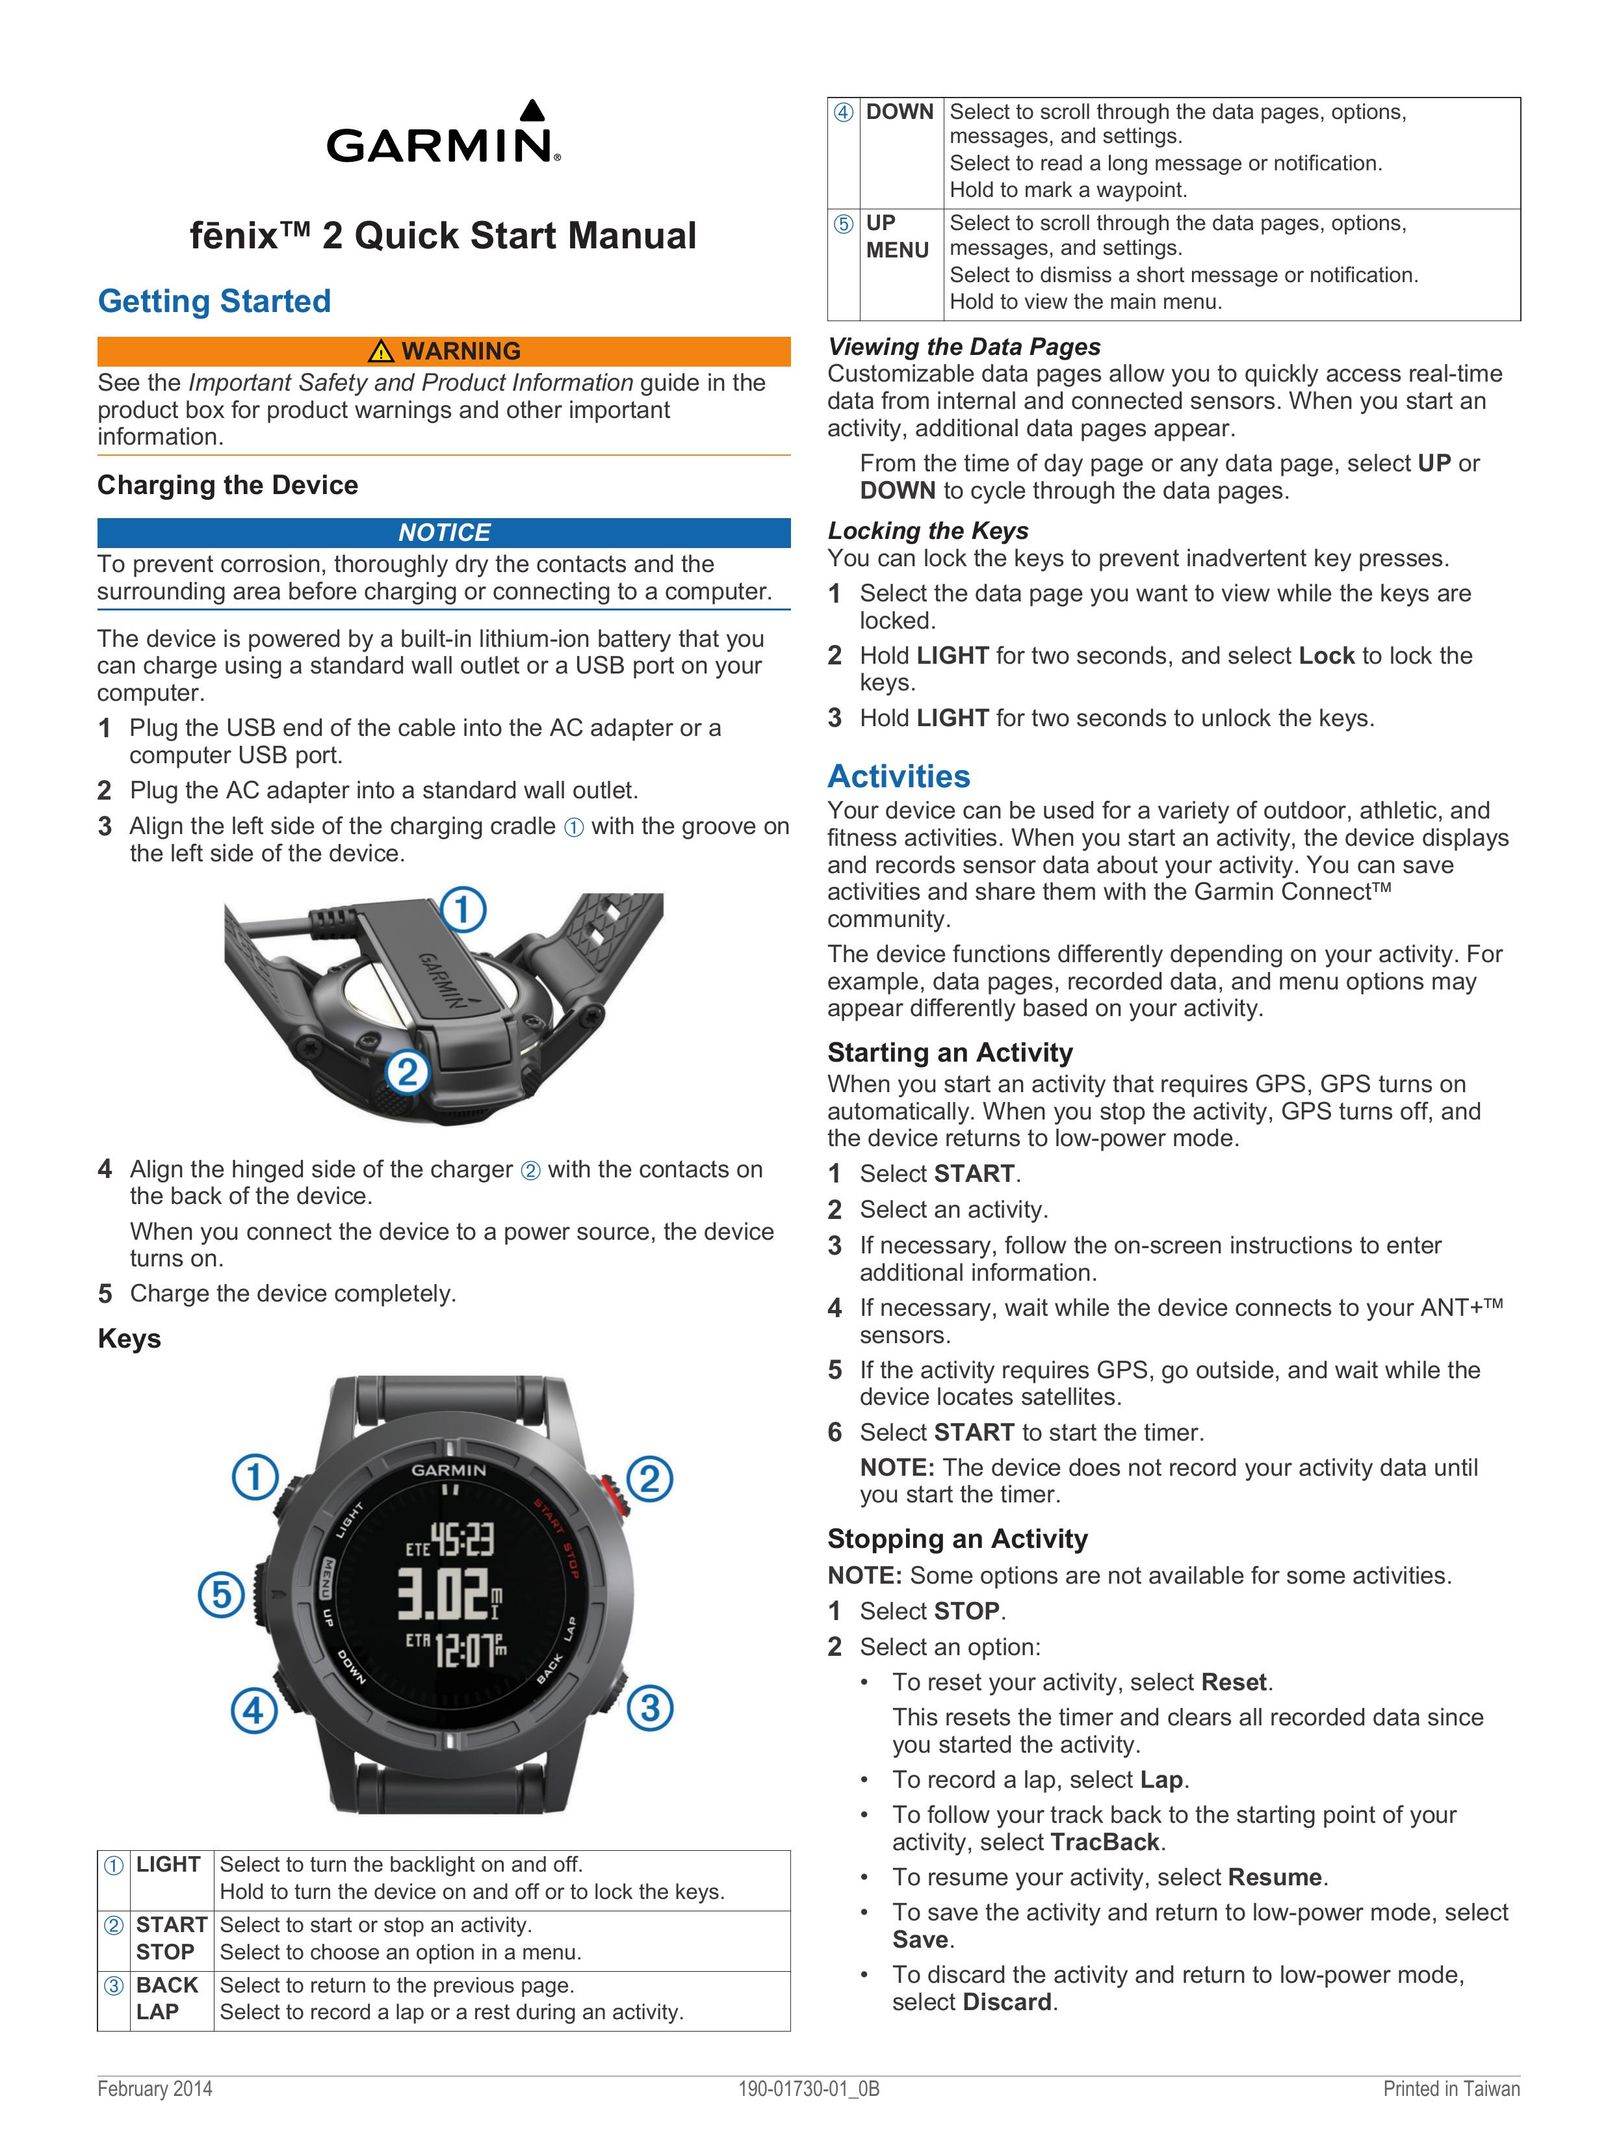 Garmin fnix 2 Watch User Manual